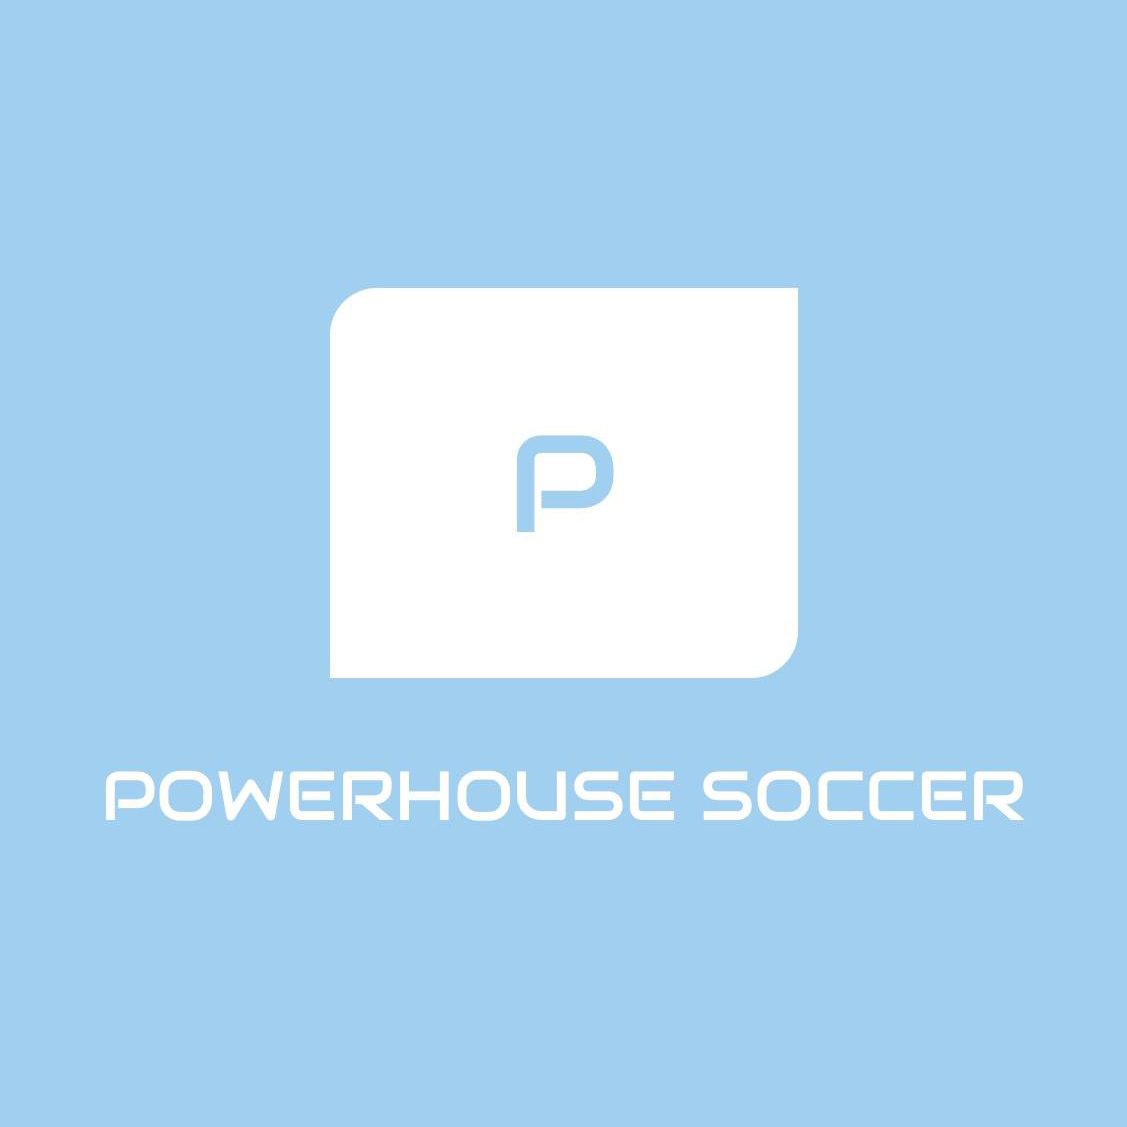 Powerhouse Soccer Logo